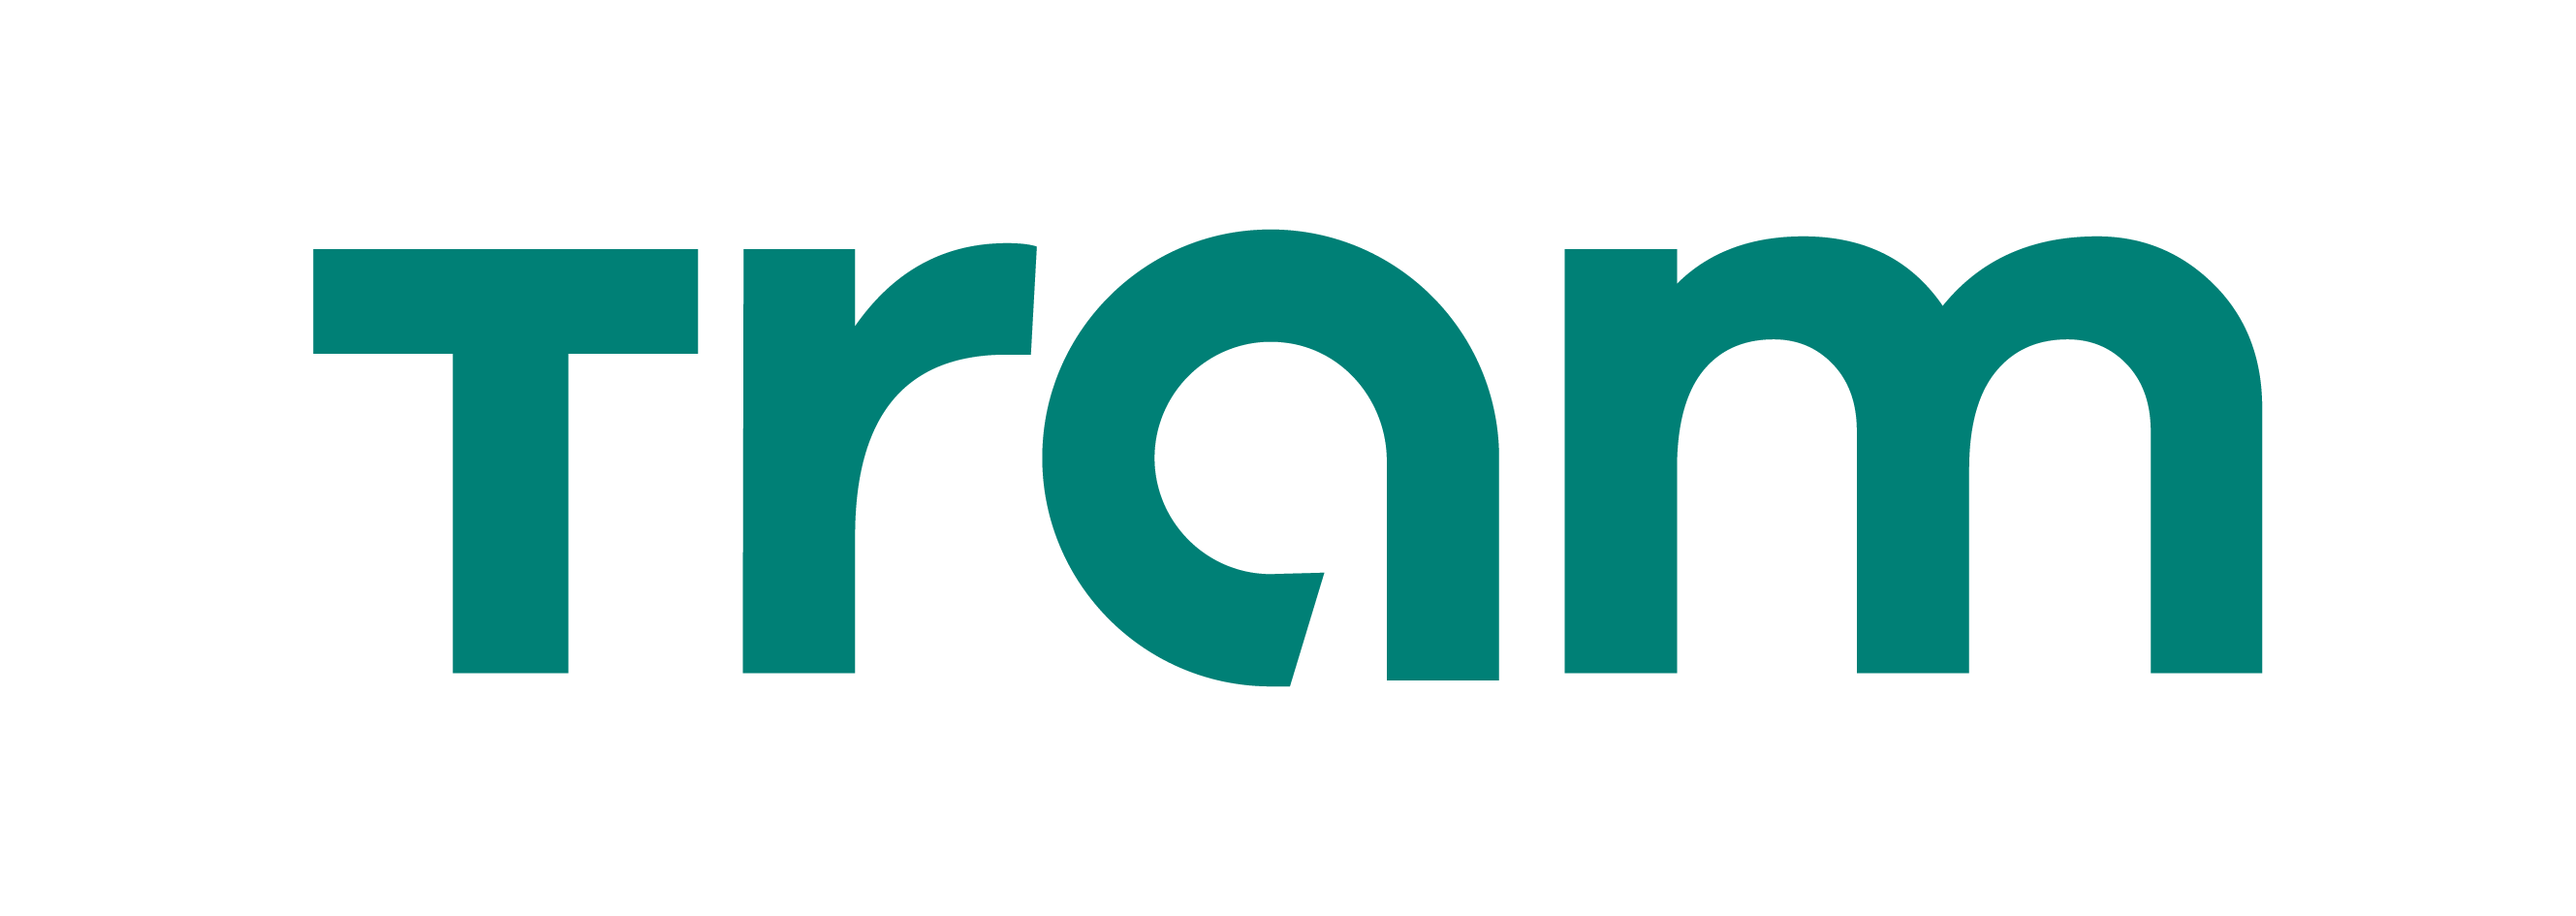 Logo tram 2024